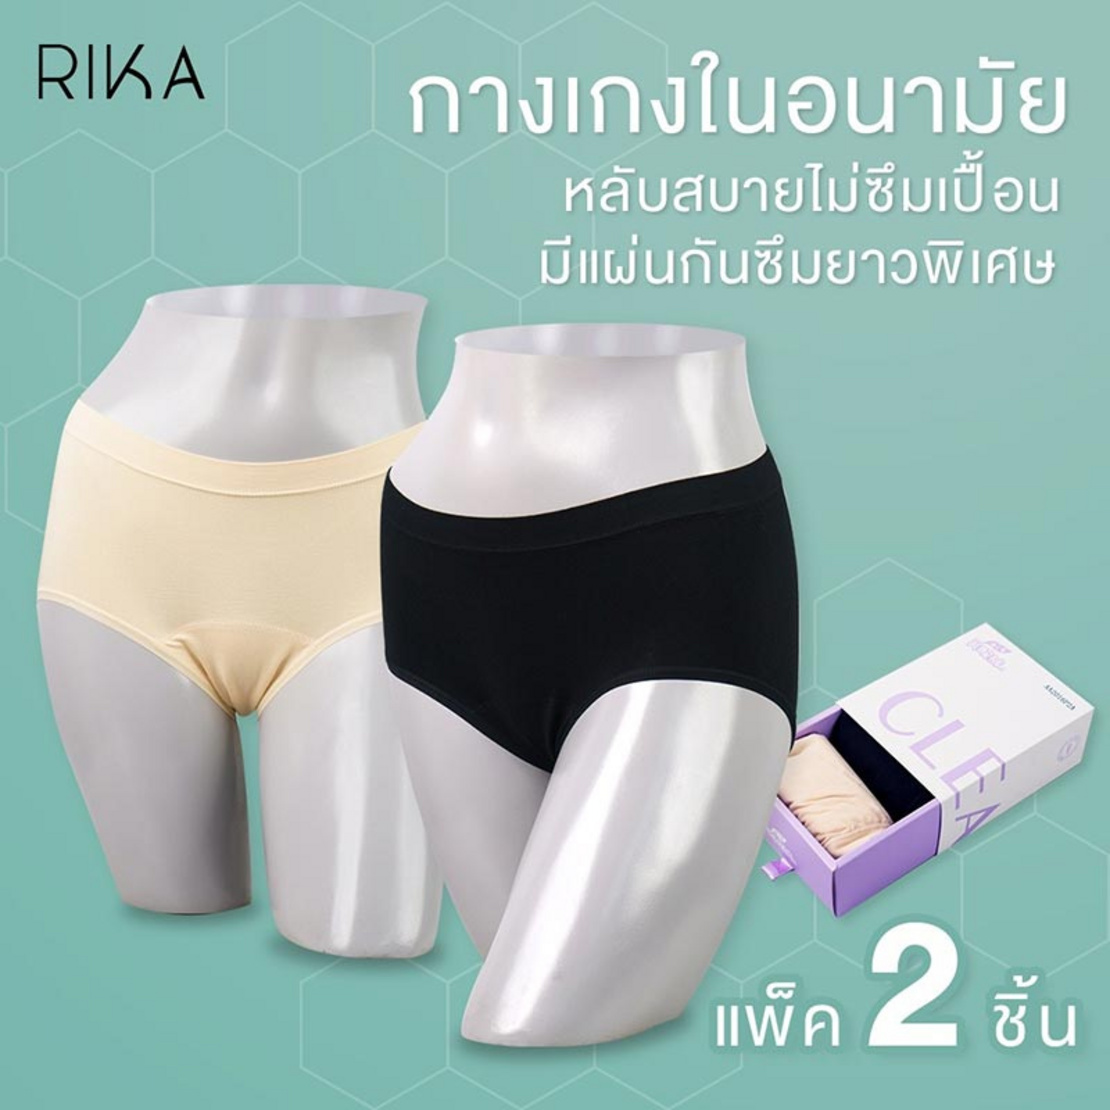 Rika กางเกงในอนามัย Seamless ทอทั้งตัวไร้ตะเข็บข้าง รุ่น Aa2016 Freesize |  Allonline